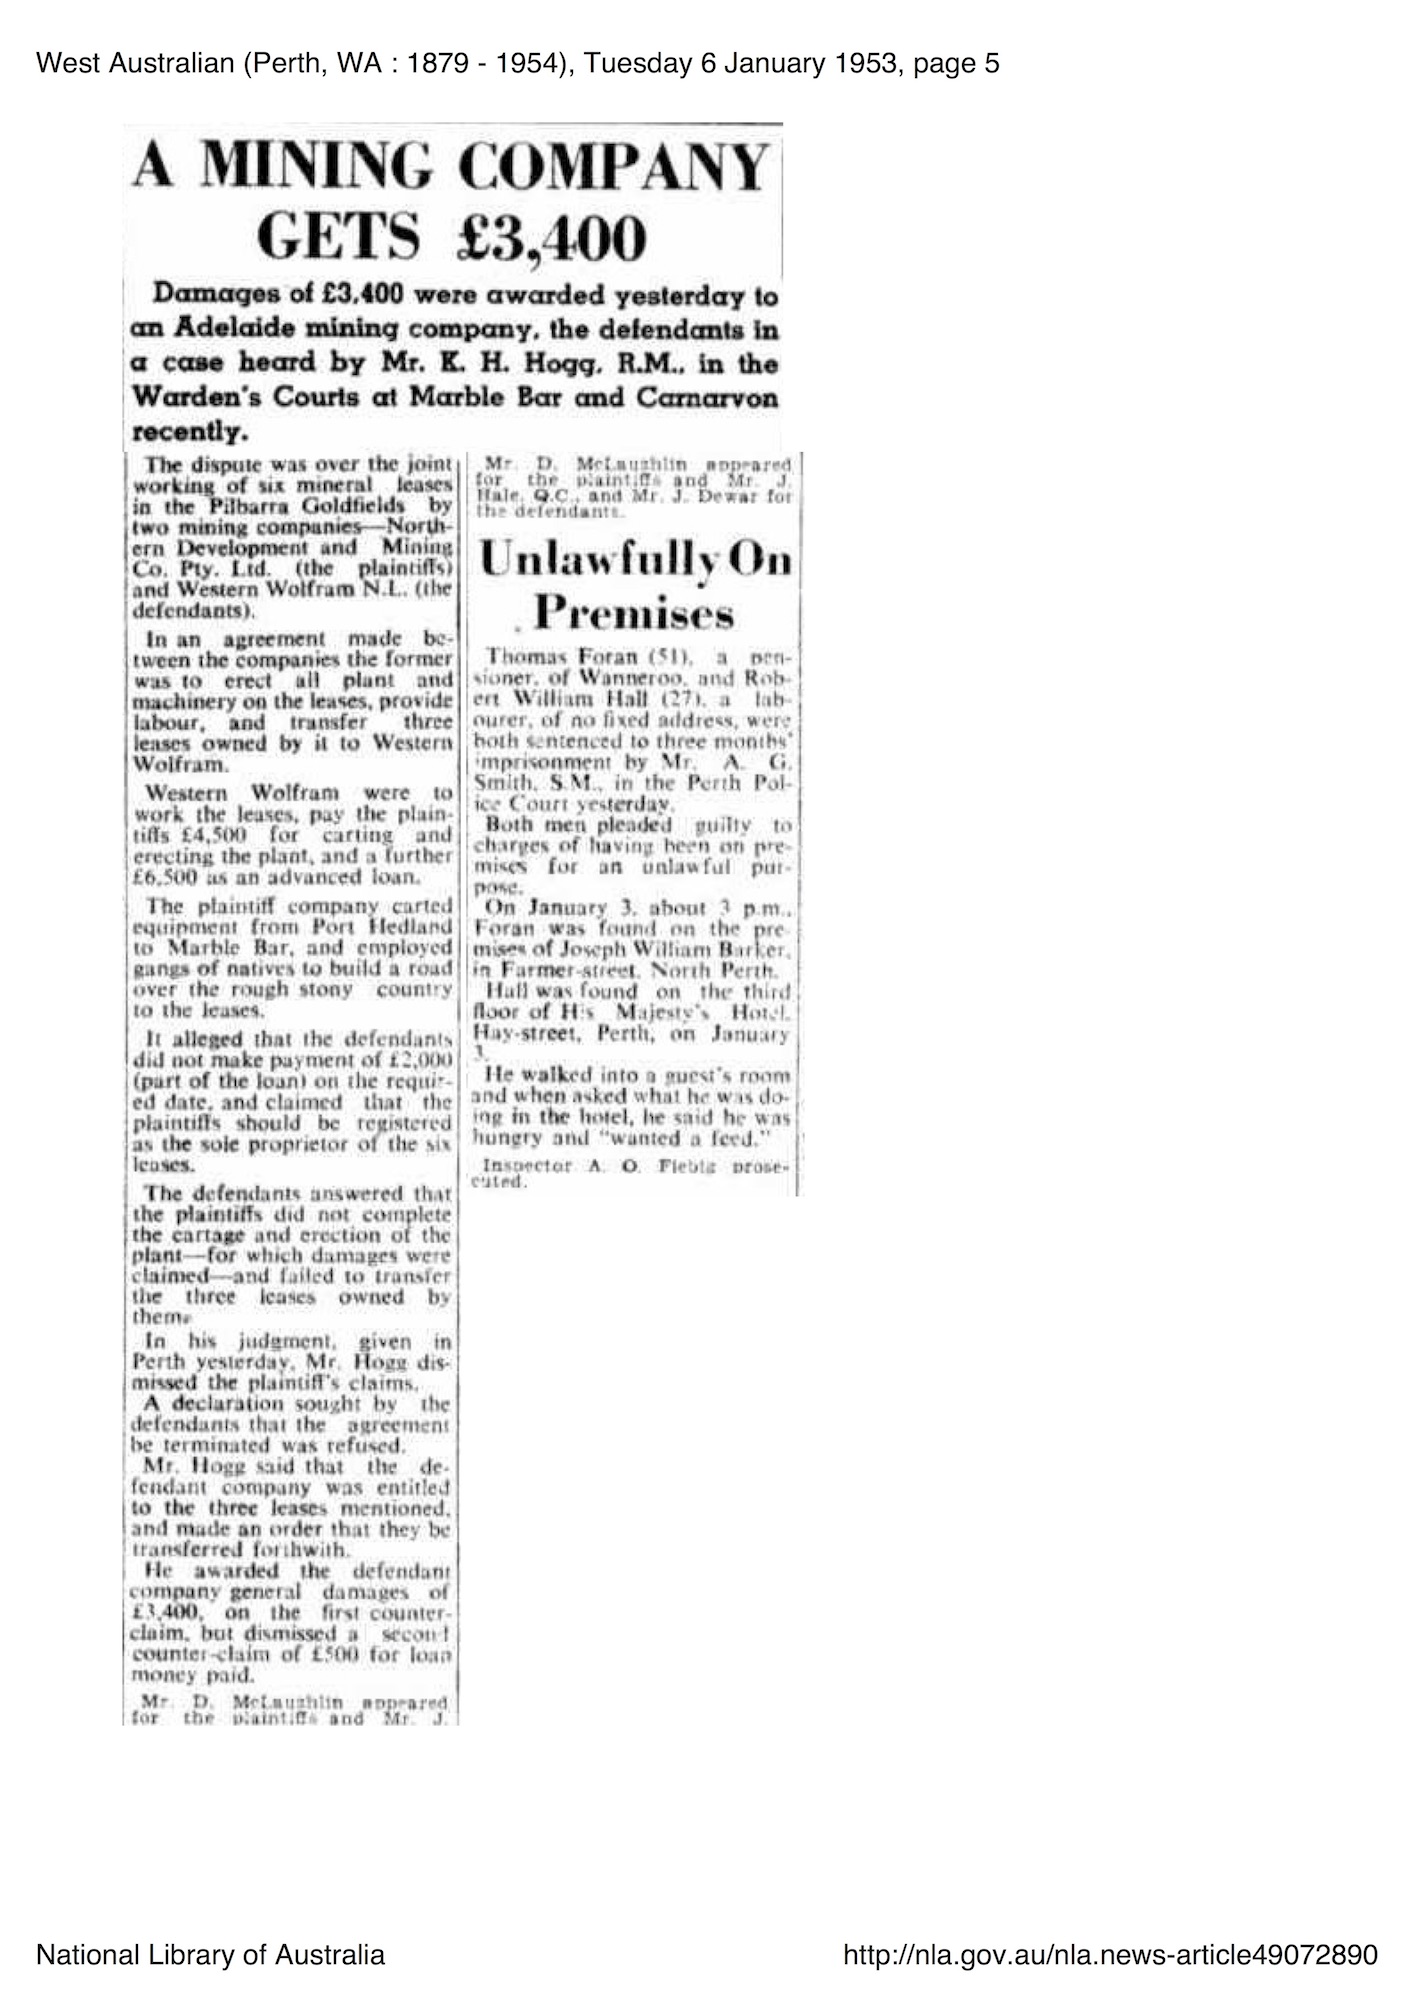 West Australian, 6 January 1953, p. 5, ‘A Mining Company Gets £3,400’